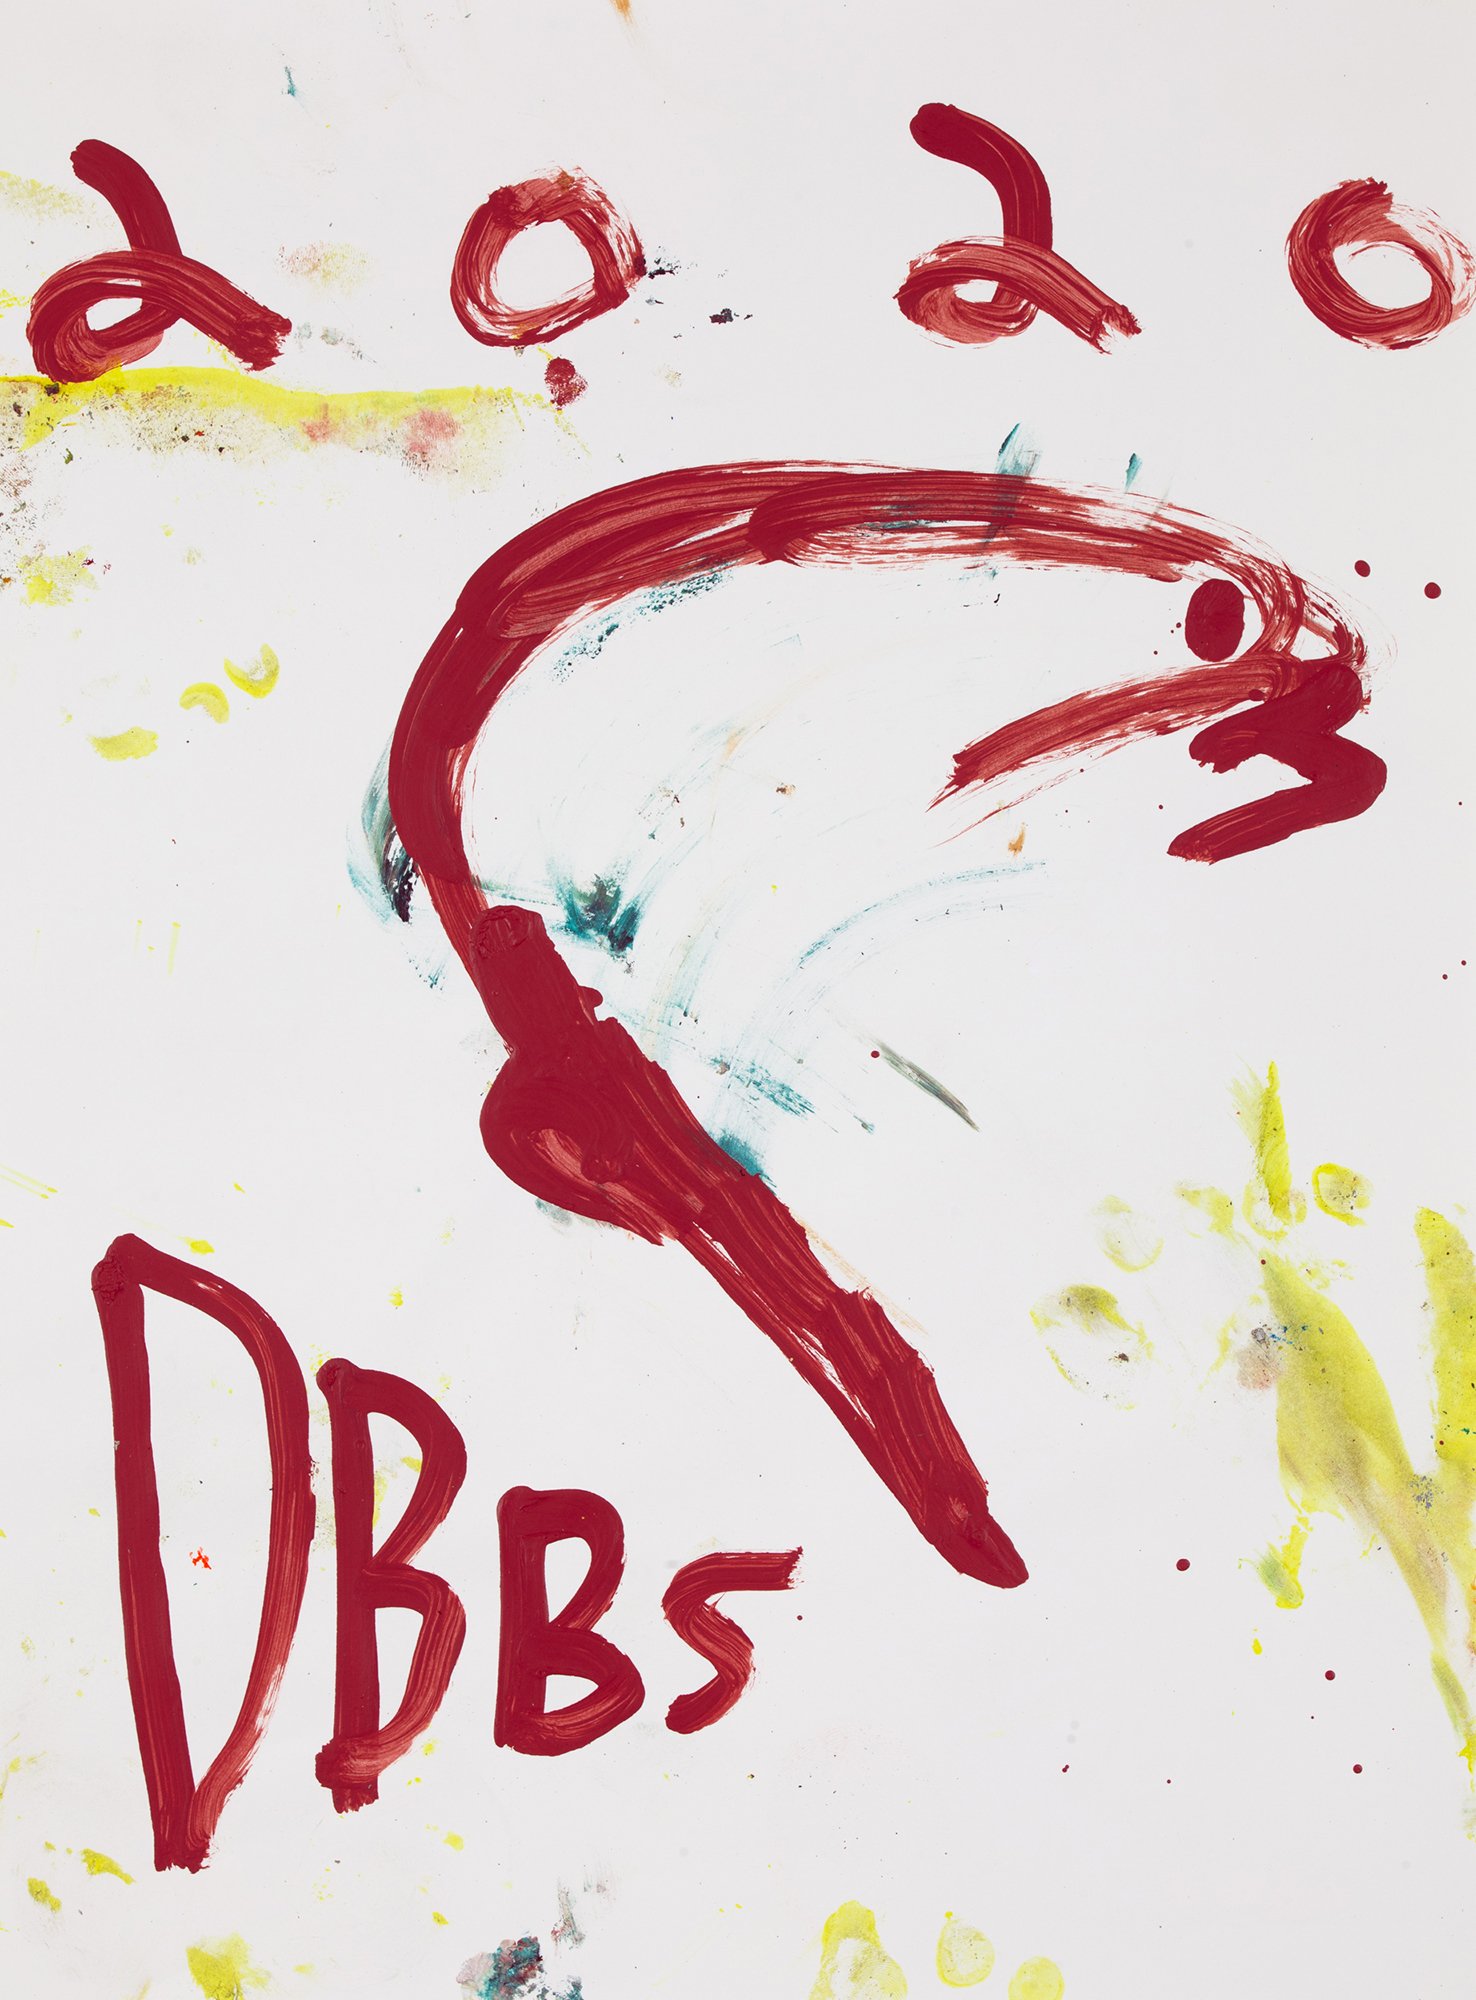  Drew Beattie and Ben Shepard  DBBS-DRW-2019-413   2019 acrylic on paper 24 x 18 inches 